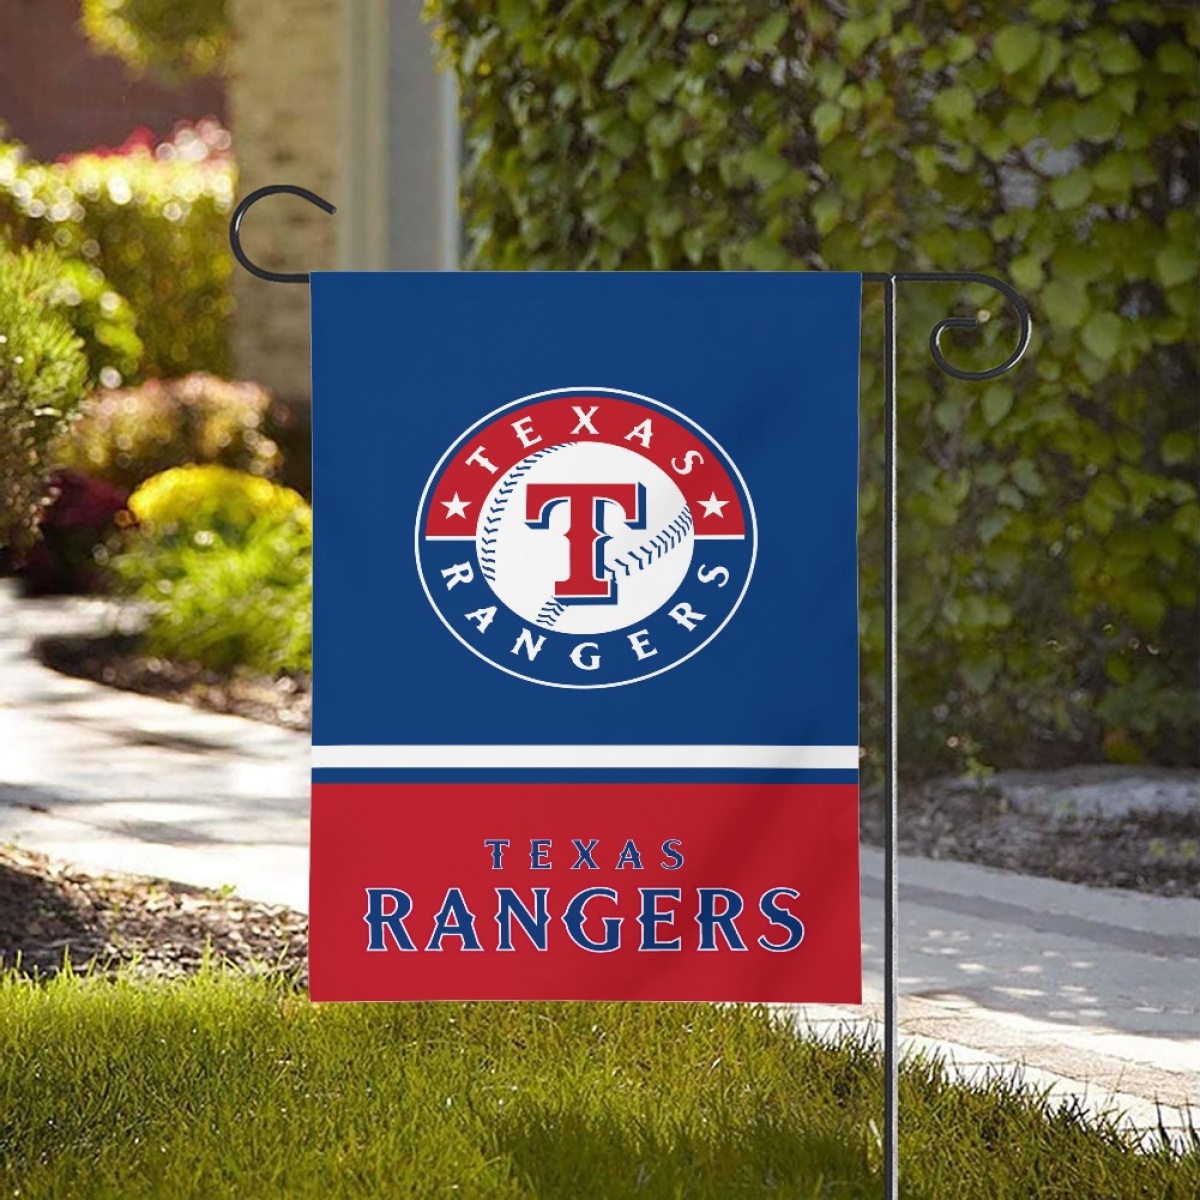 Texas Rangers Double-Sided Garden Flag 001 (Pls check description for details)